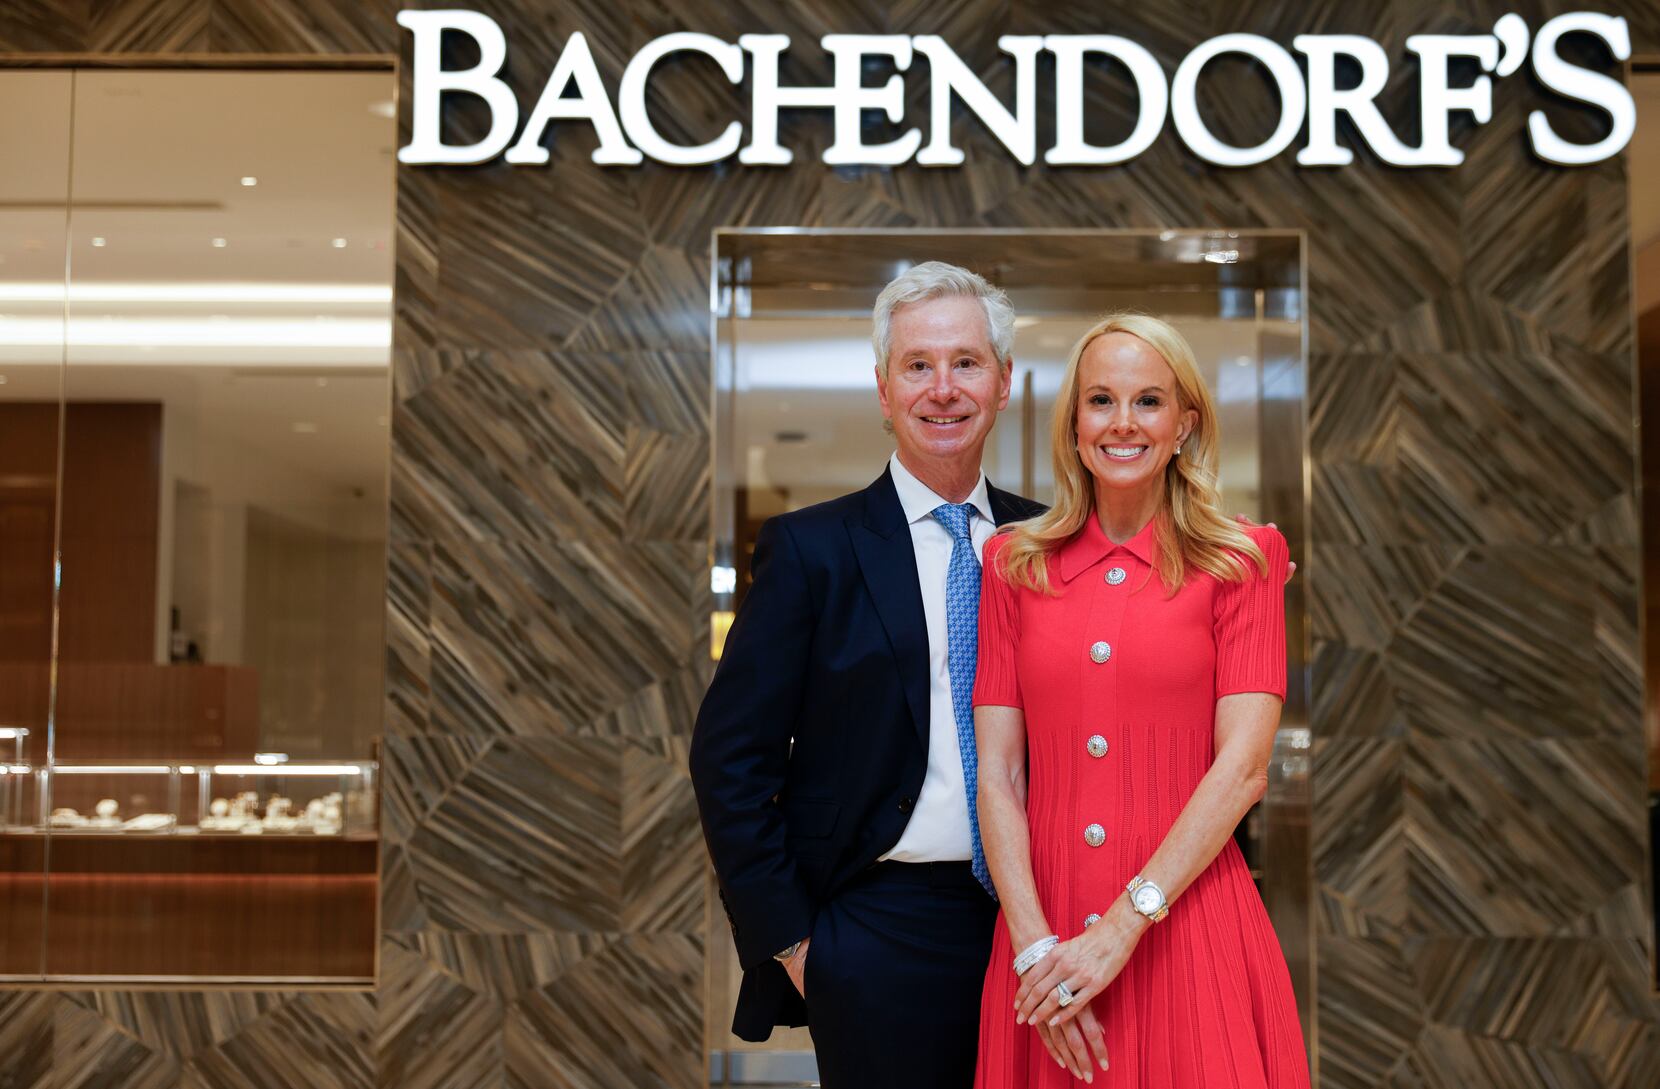 Dallas jeweler Bachendorf’s has supersized its Galleria store